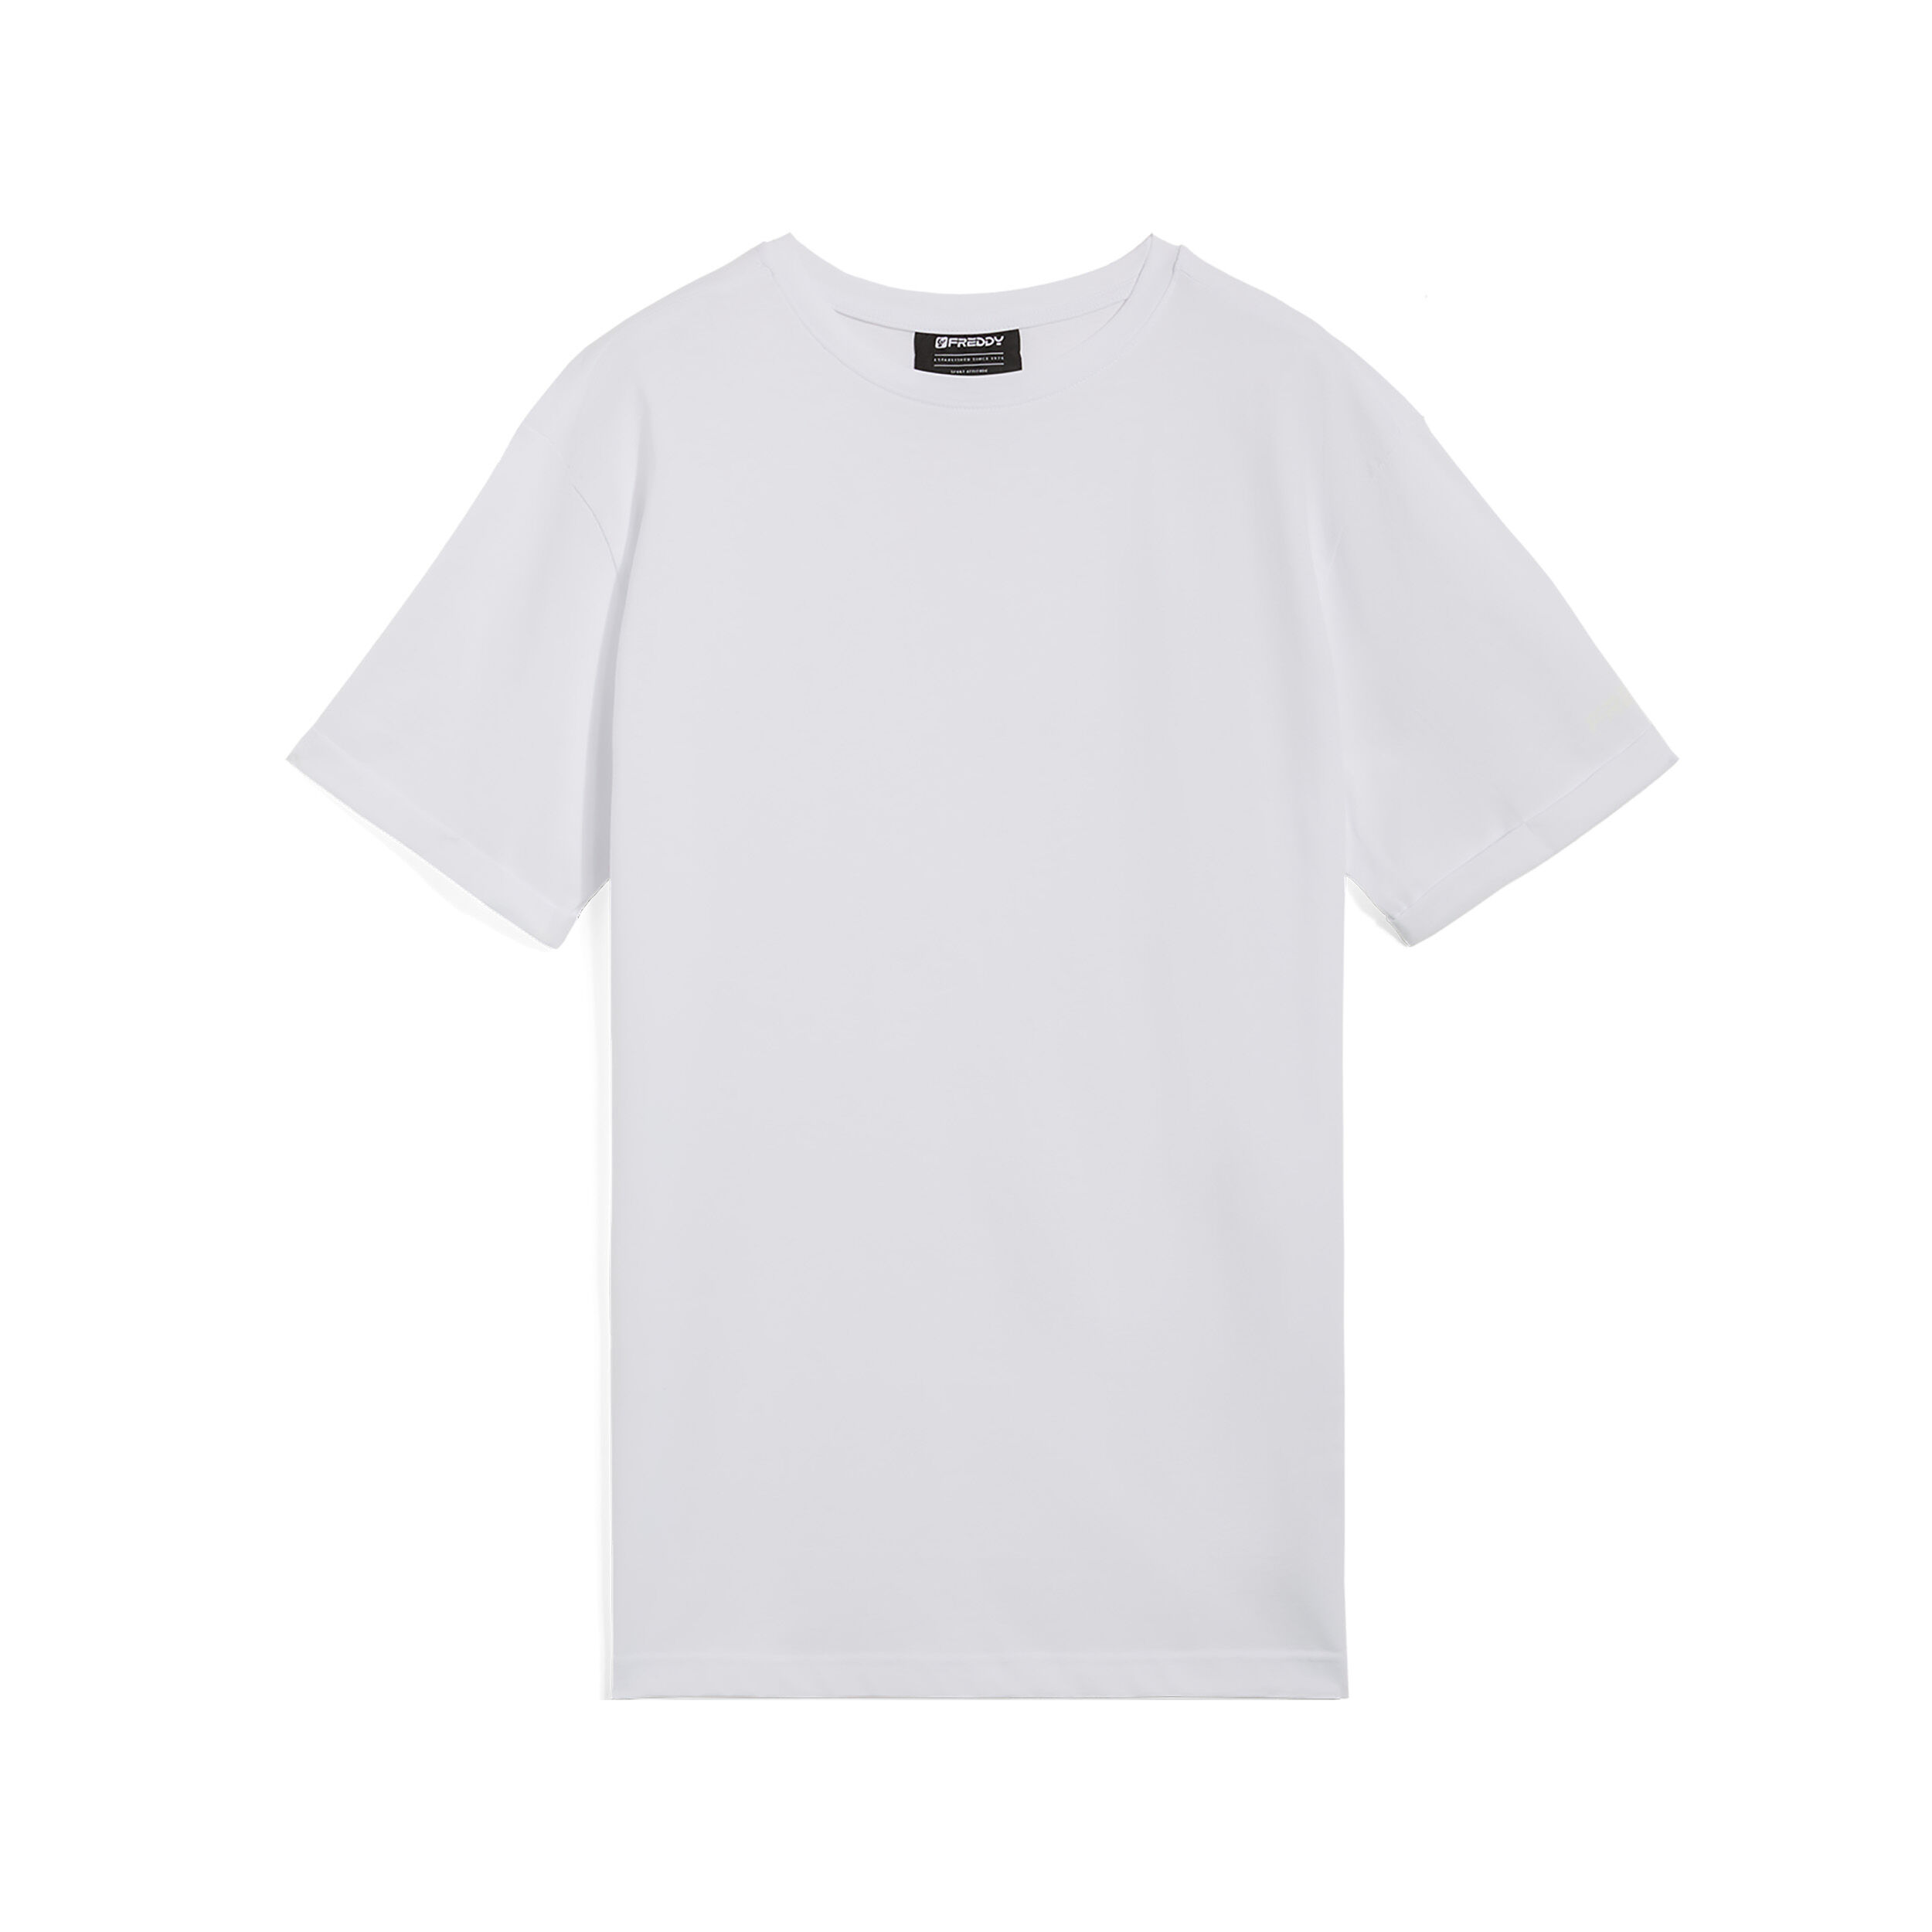 Freddy T-shirt da uomo design essenziale in cotone 100% Bianco Uomo Medium